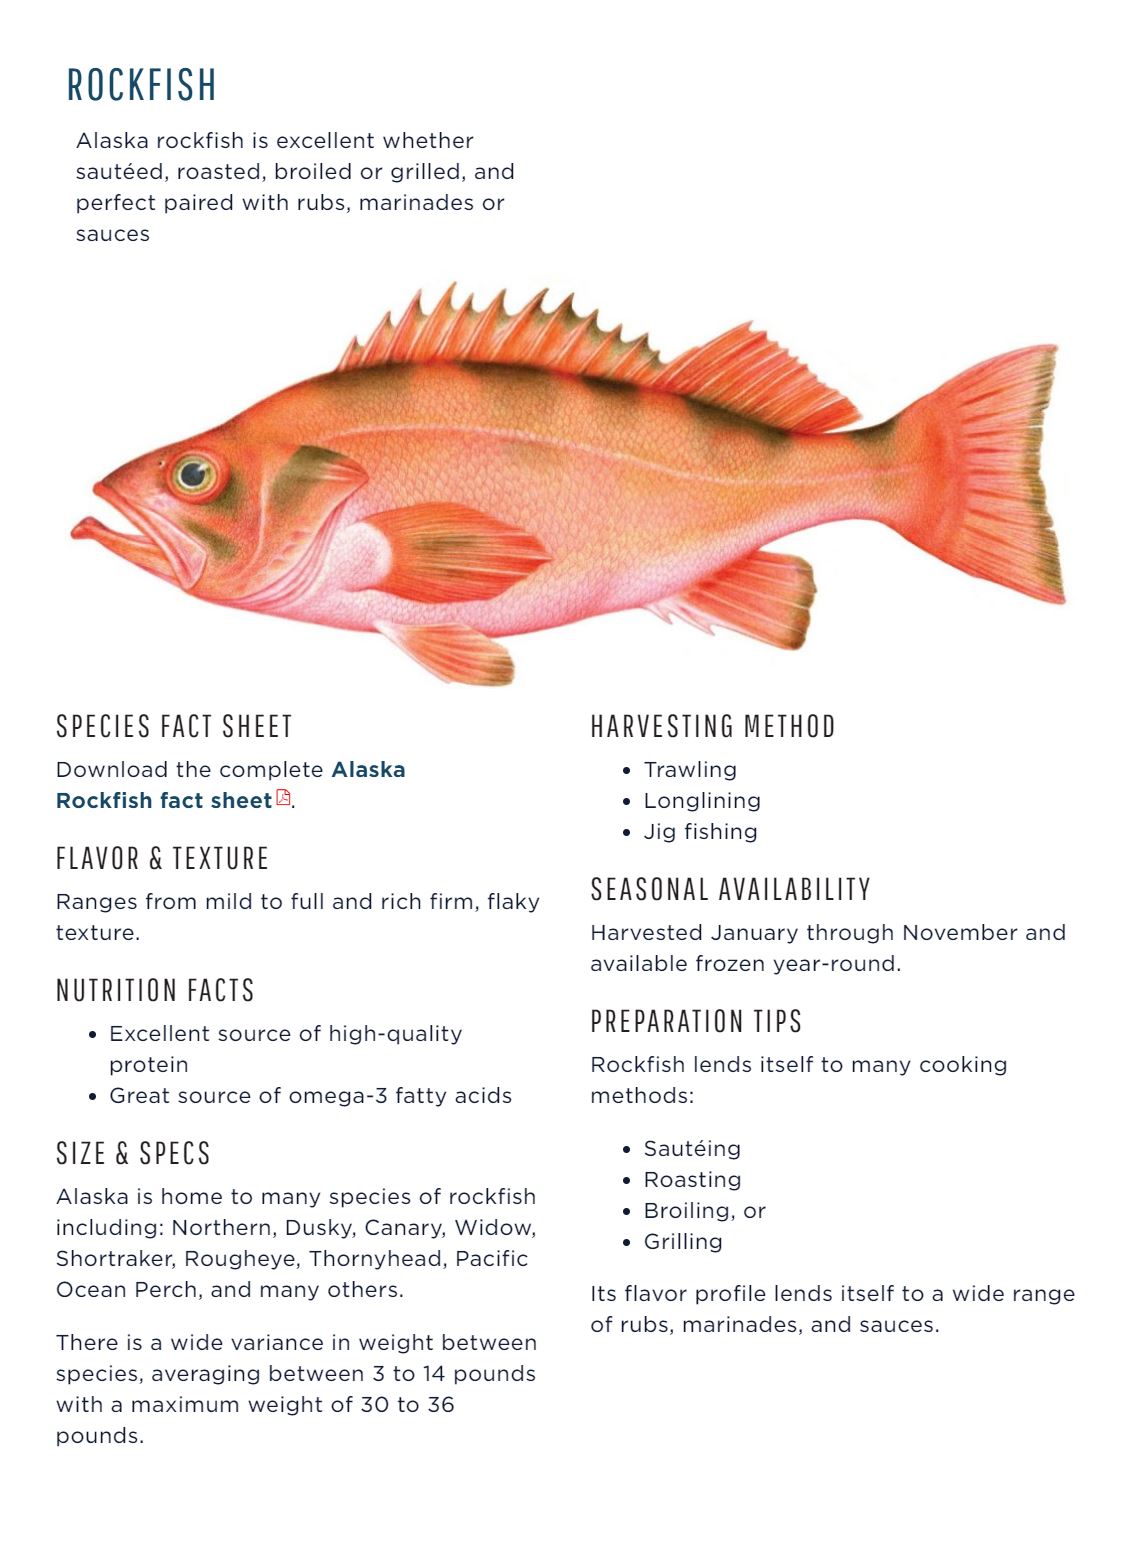 Wild Alaskan Rockfish Share - 20 lbs.